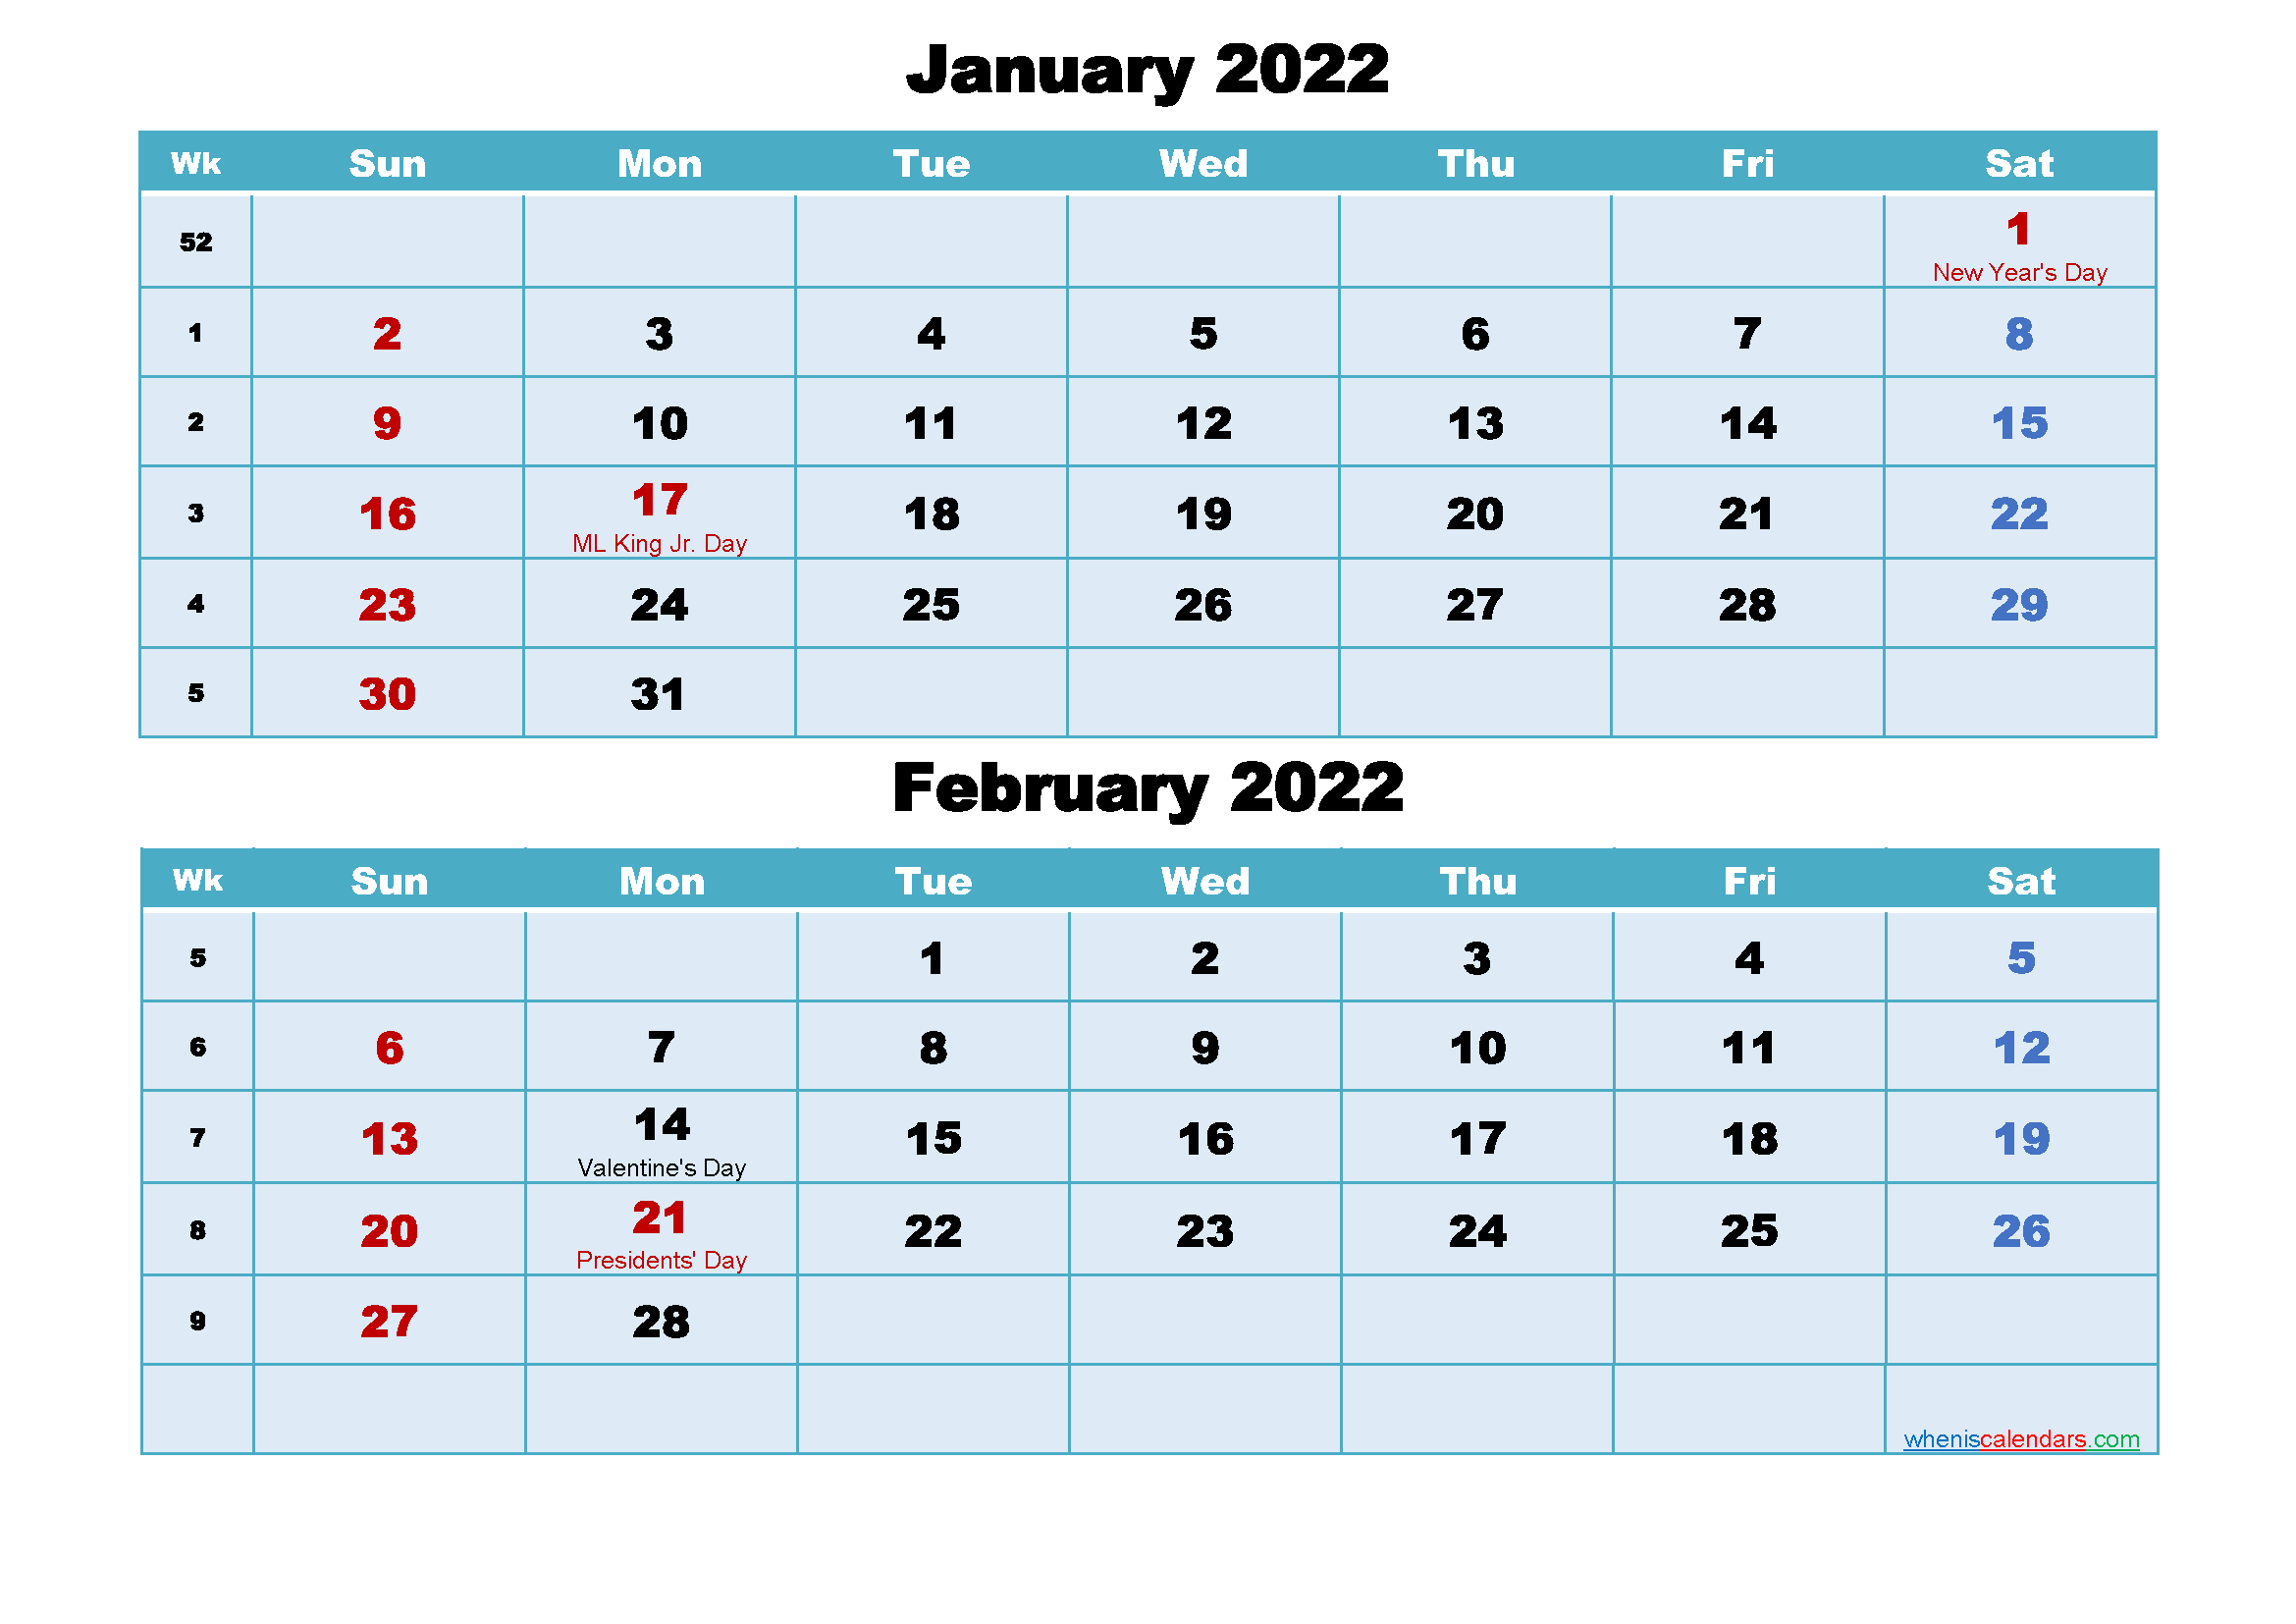 January and February 2022 Calendar with Holidays